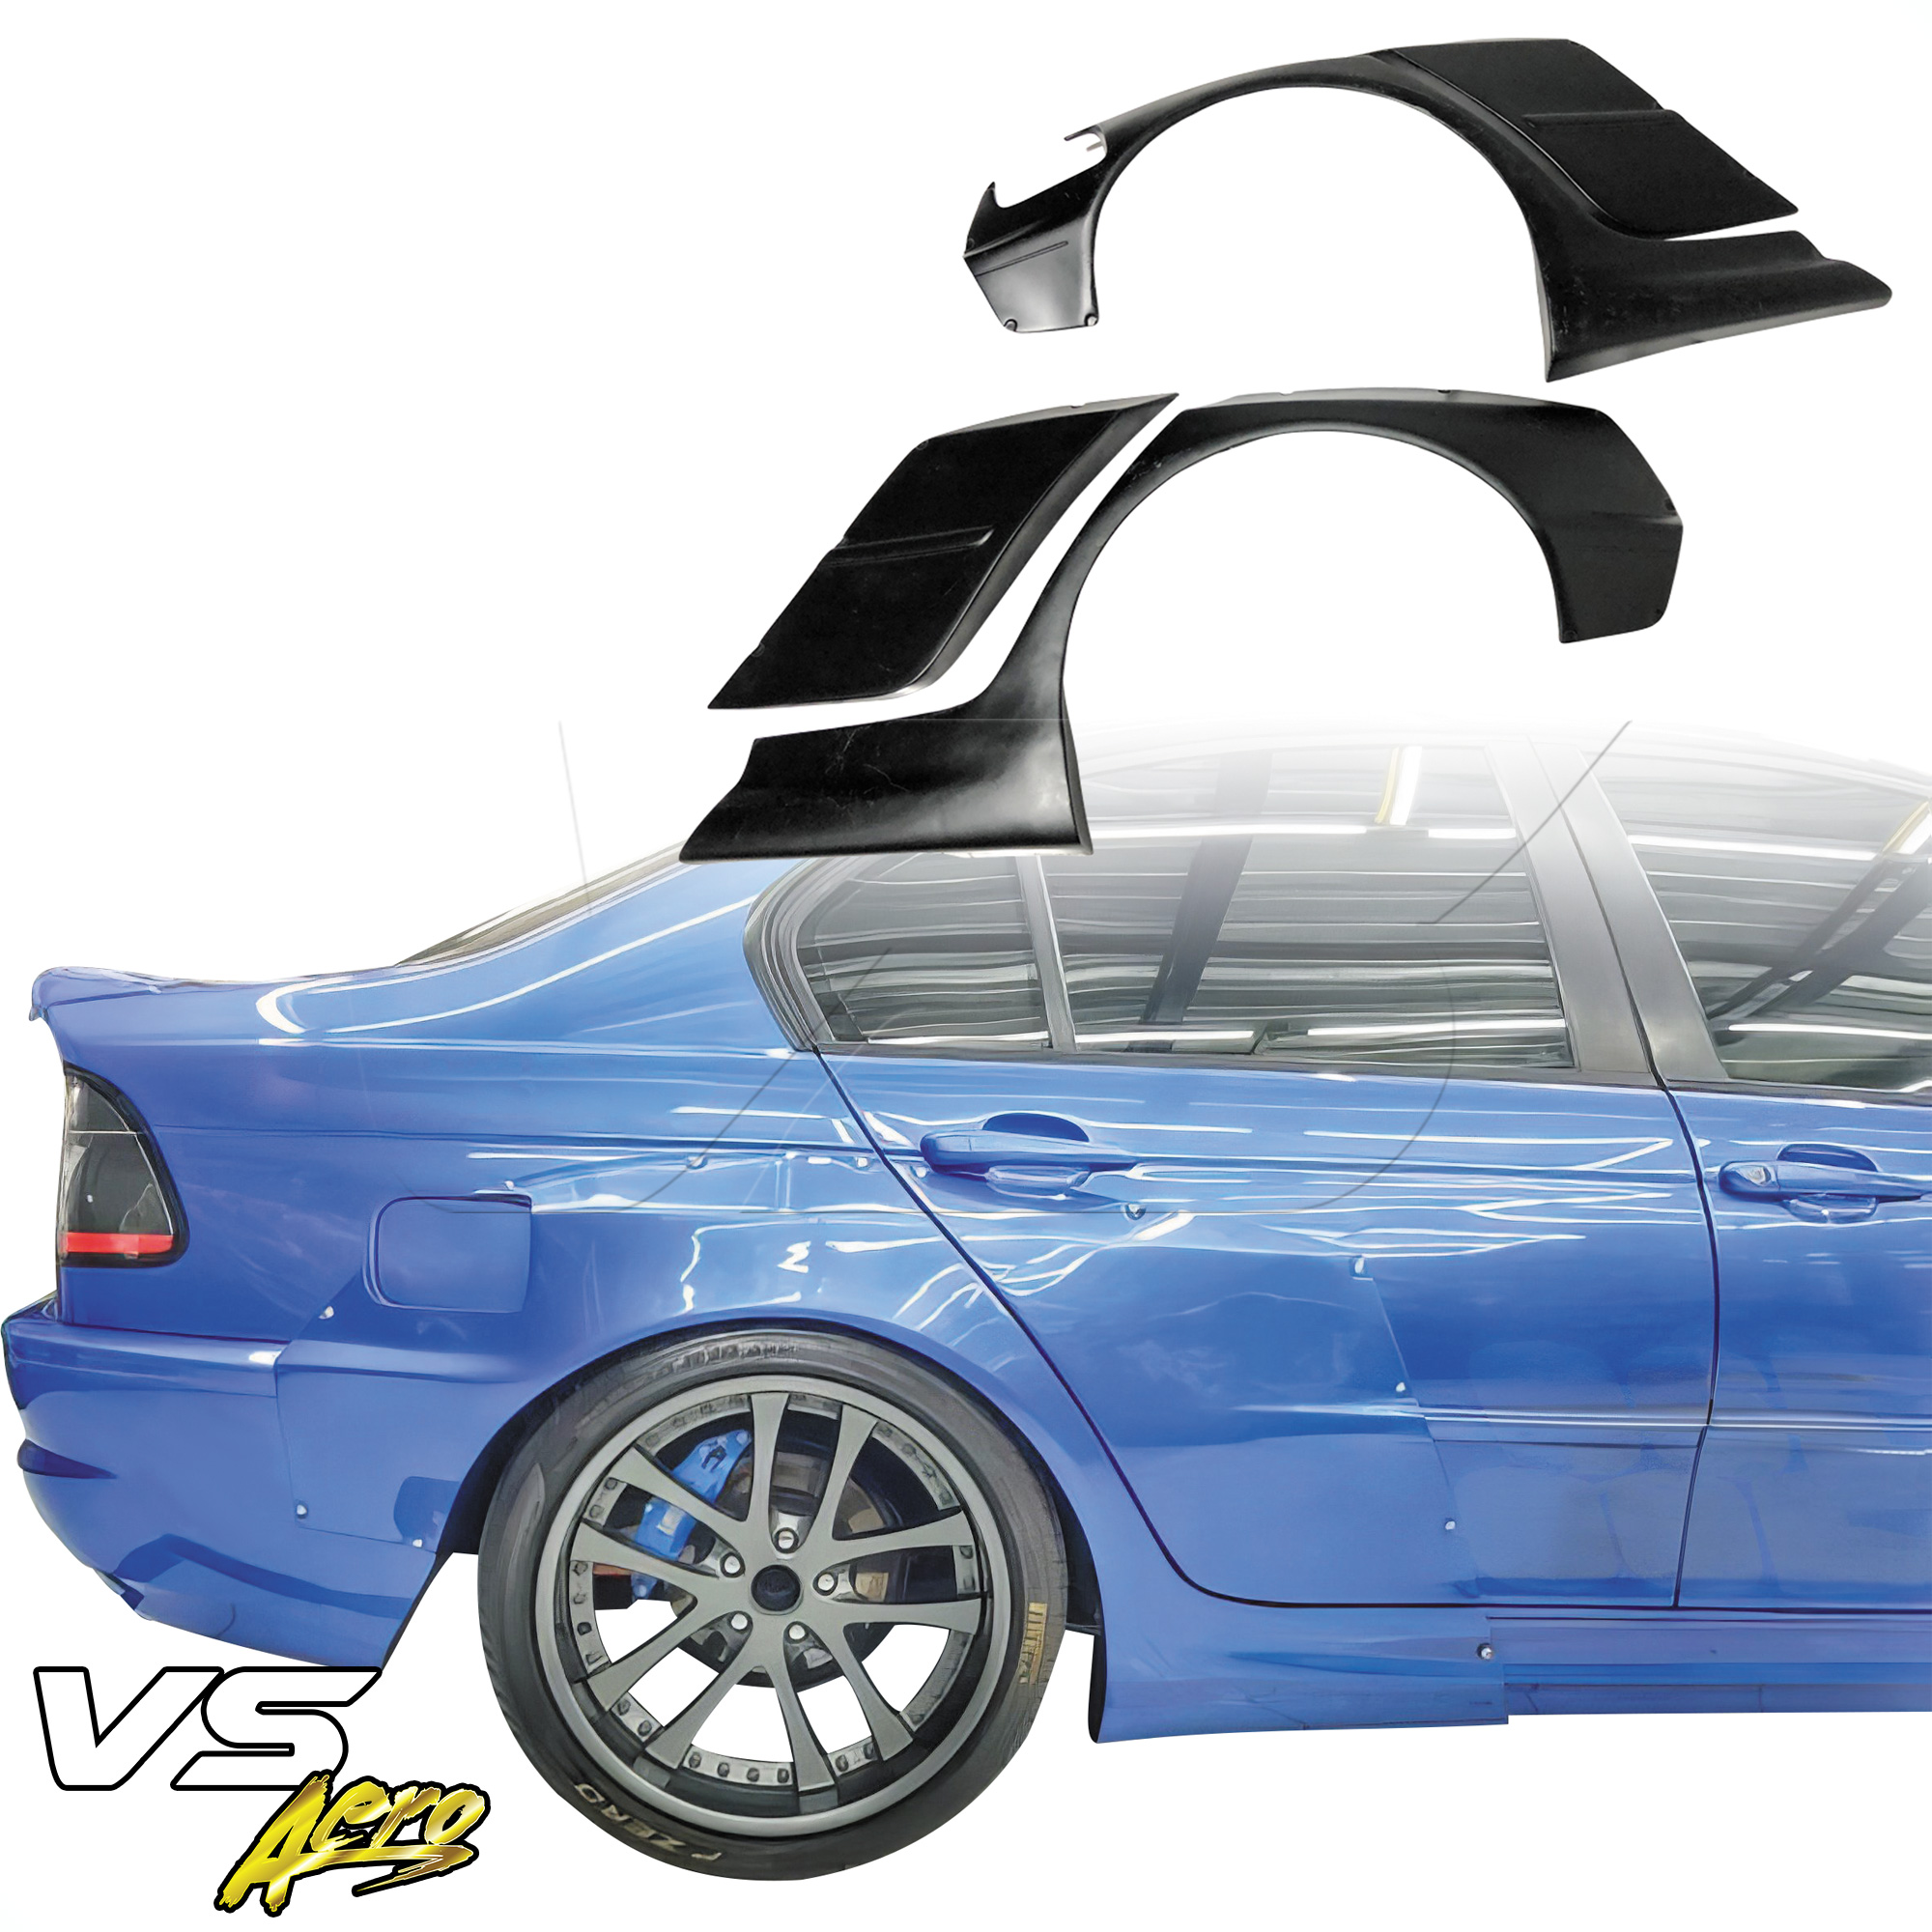 VSaero FRP TKYO V2 Wide Body Fender Flares (rear) > BMW 3-Series 325i 330i E46 1999-2005 > 4dr Sedan - Image 17